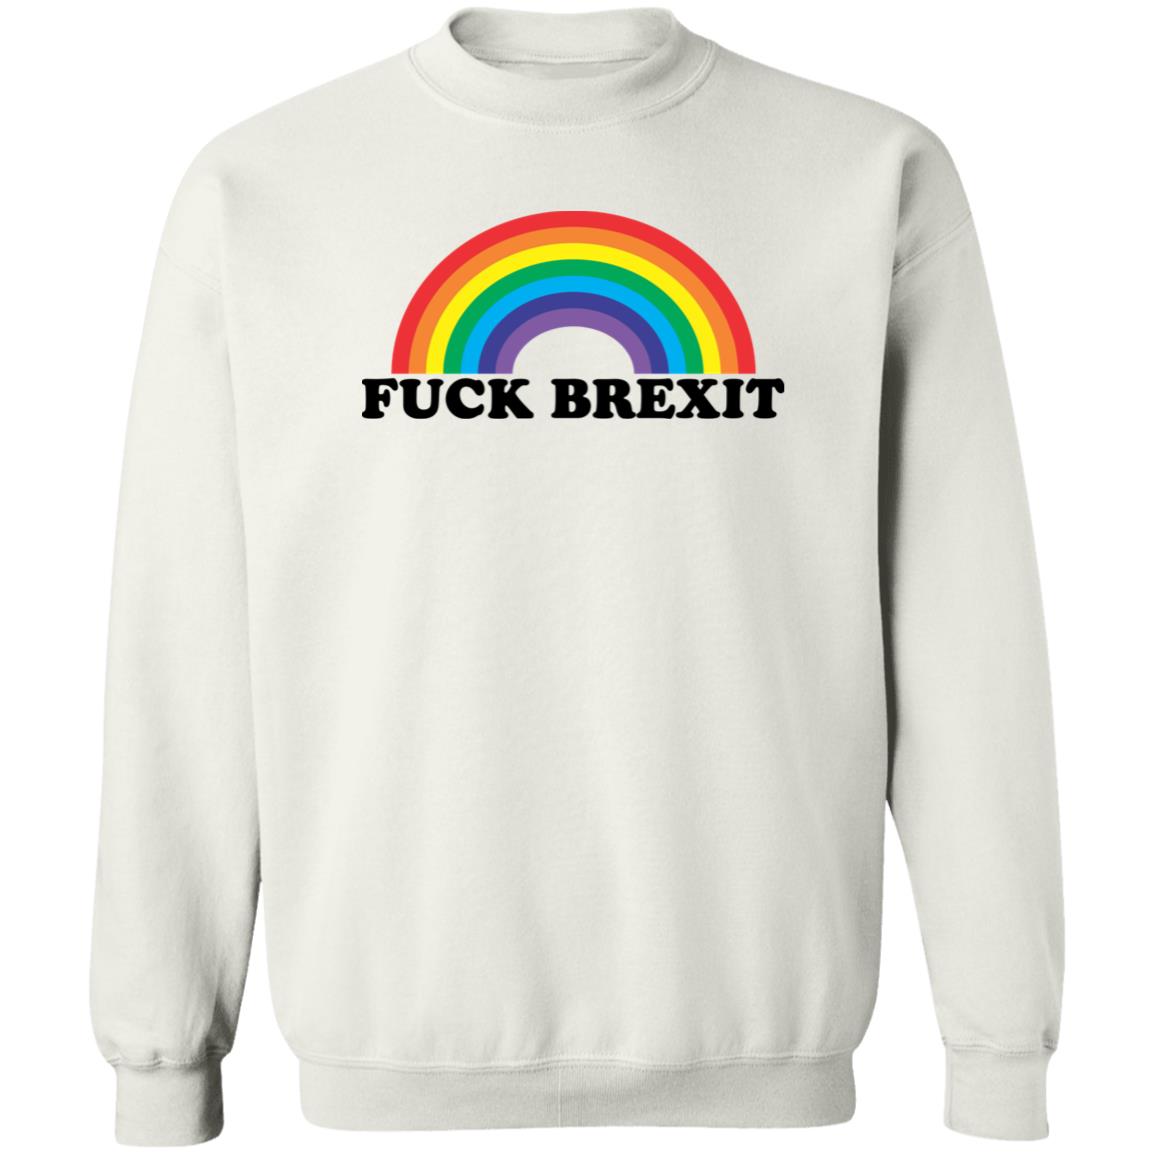 Fuck Brexit Shirt 2